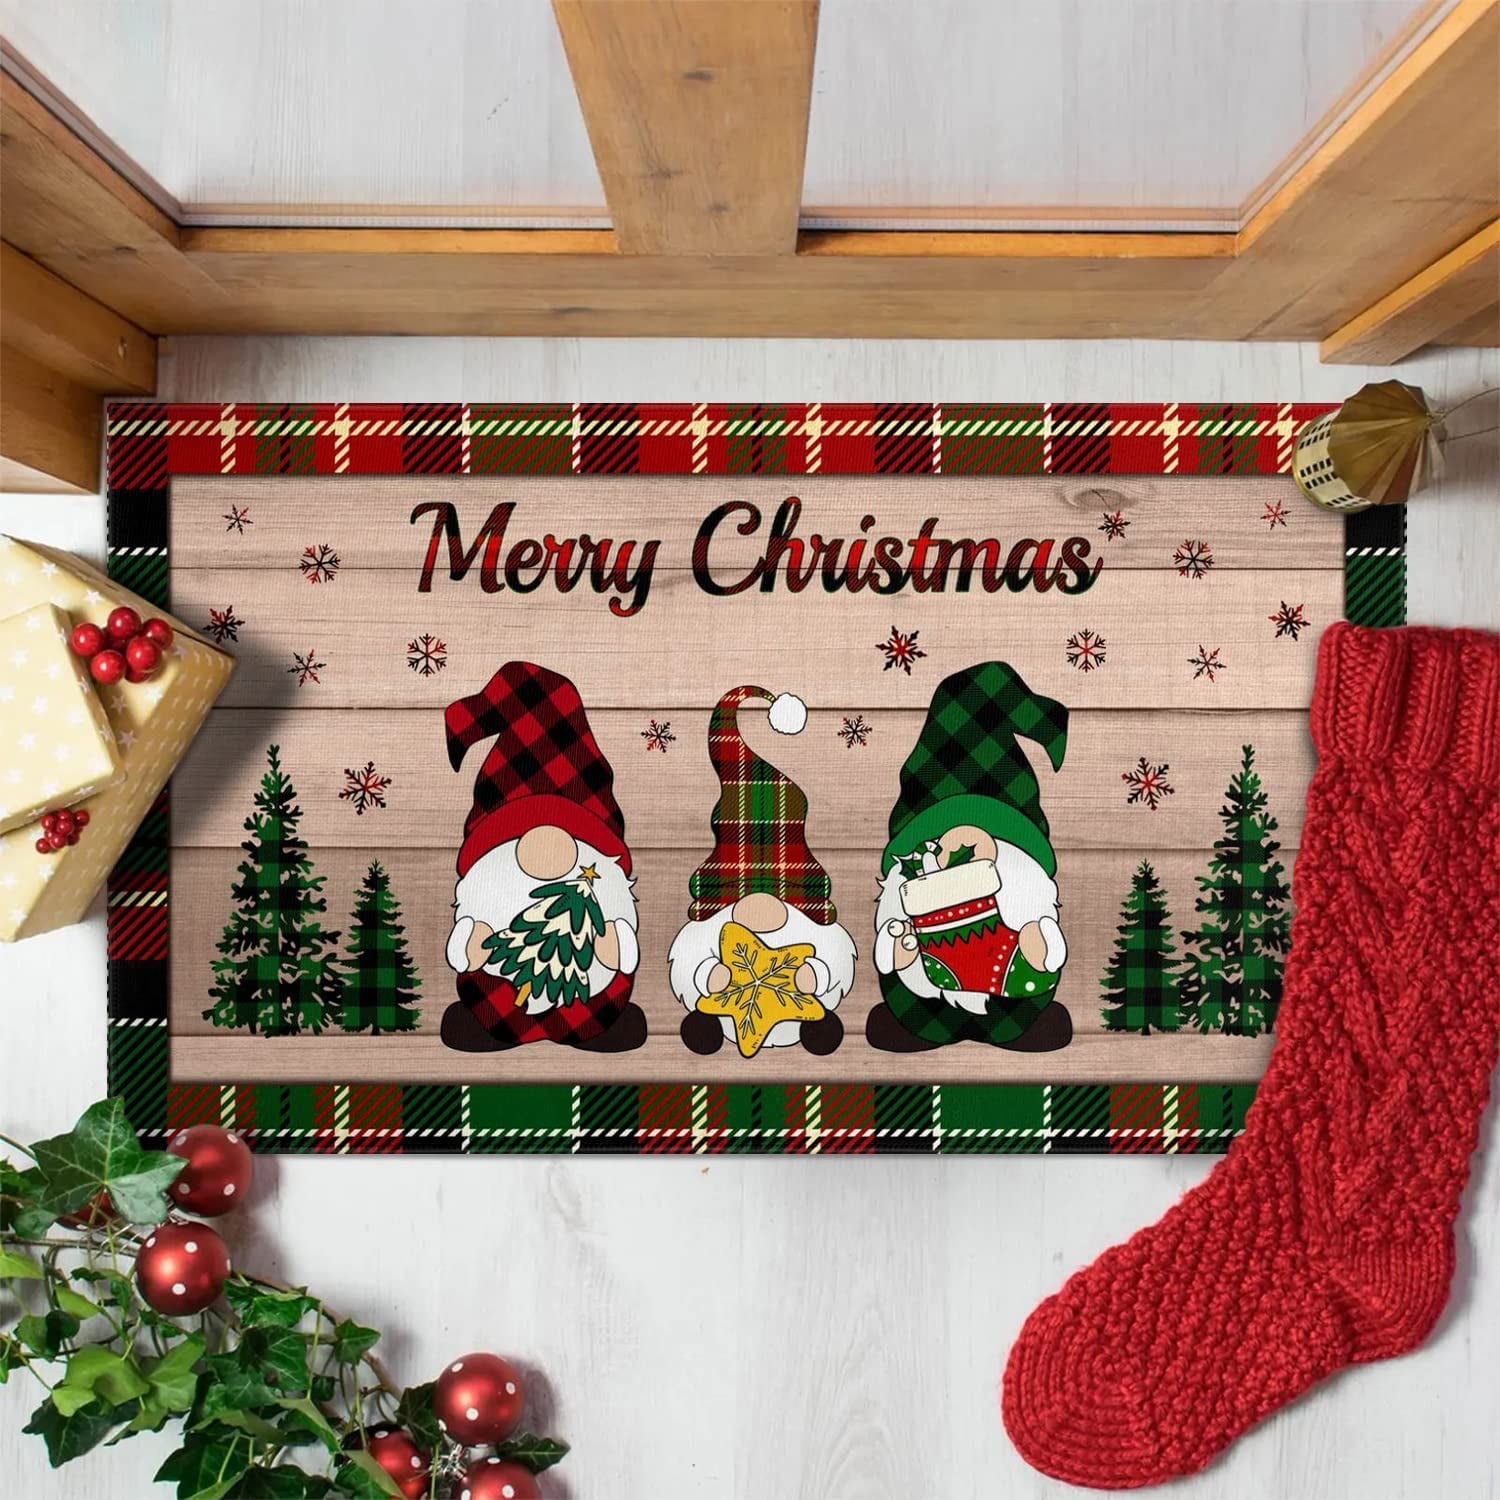 Christmas, Cardinals in Winter Barn Doormat 18 X 30, Outdoor/indoor, Heavy  Duty Recycled Rubber, Non-slip Backing, Winter 